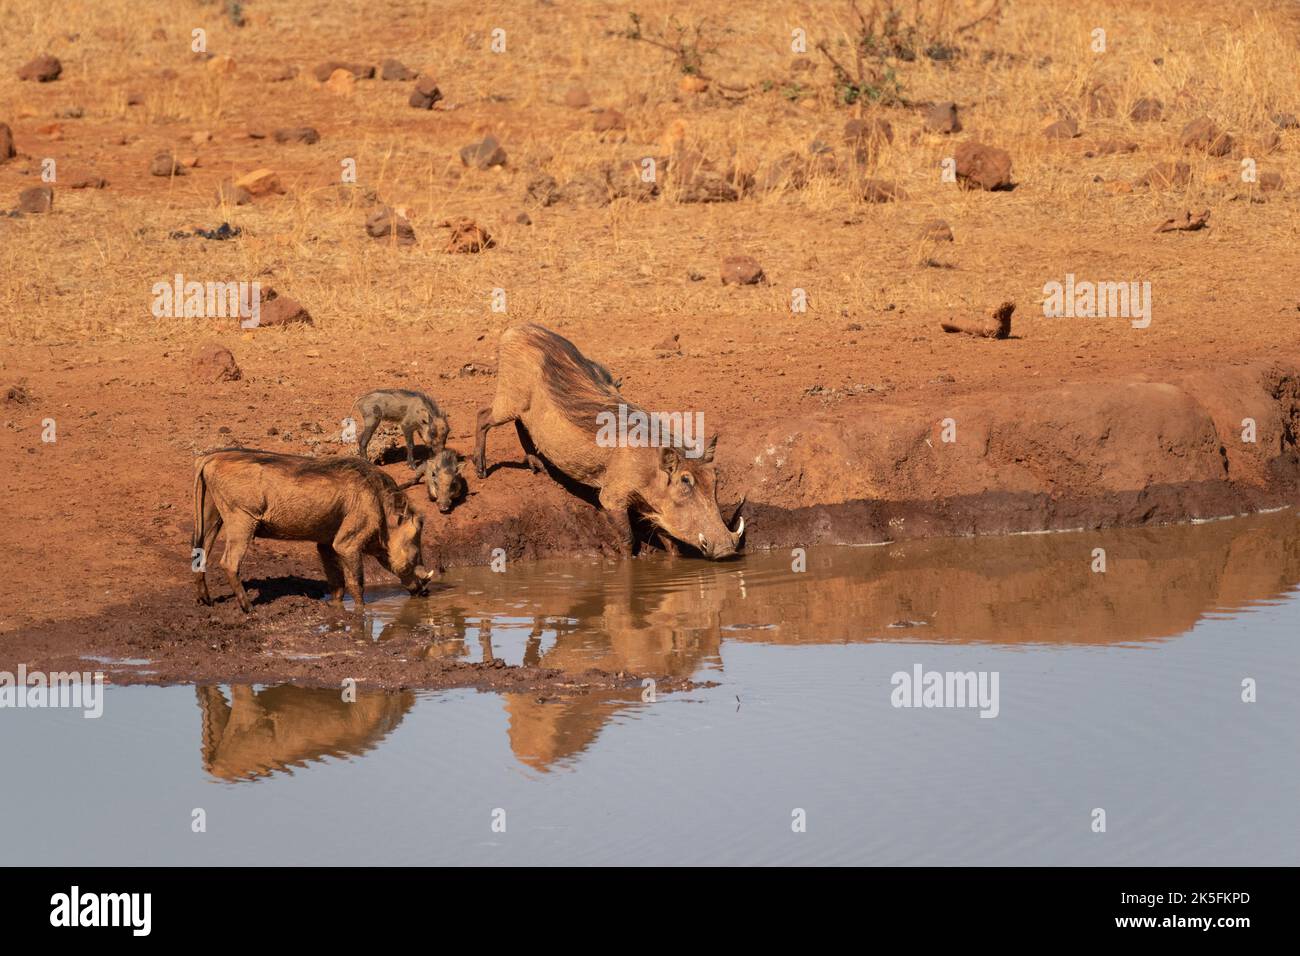 Warthog común, Phacochoerus africanus, Suidae, Parque Nacional Tsavo Este, Kenia, África Foto de stock